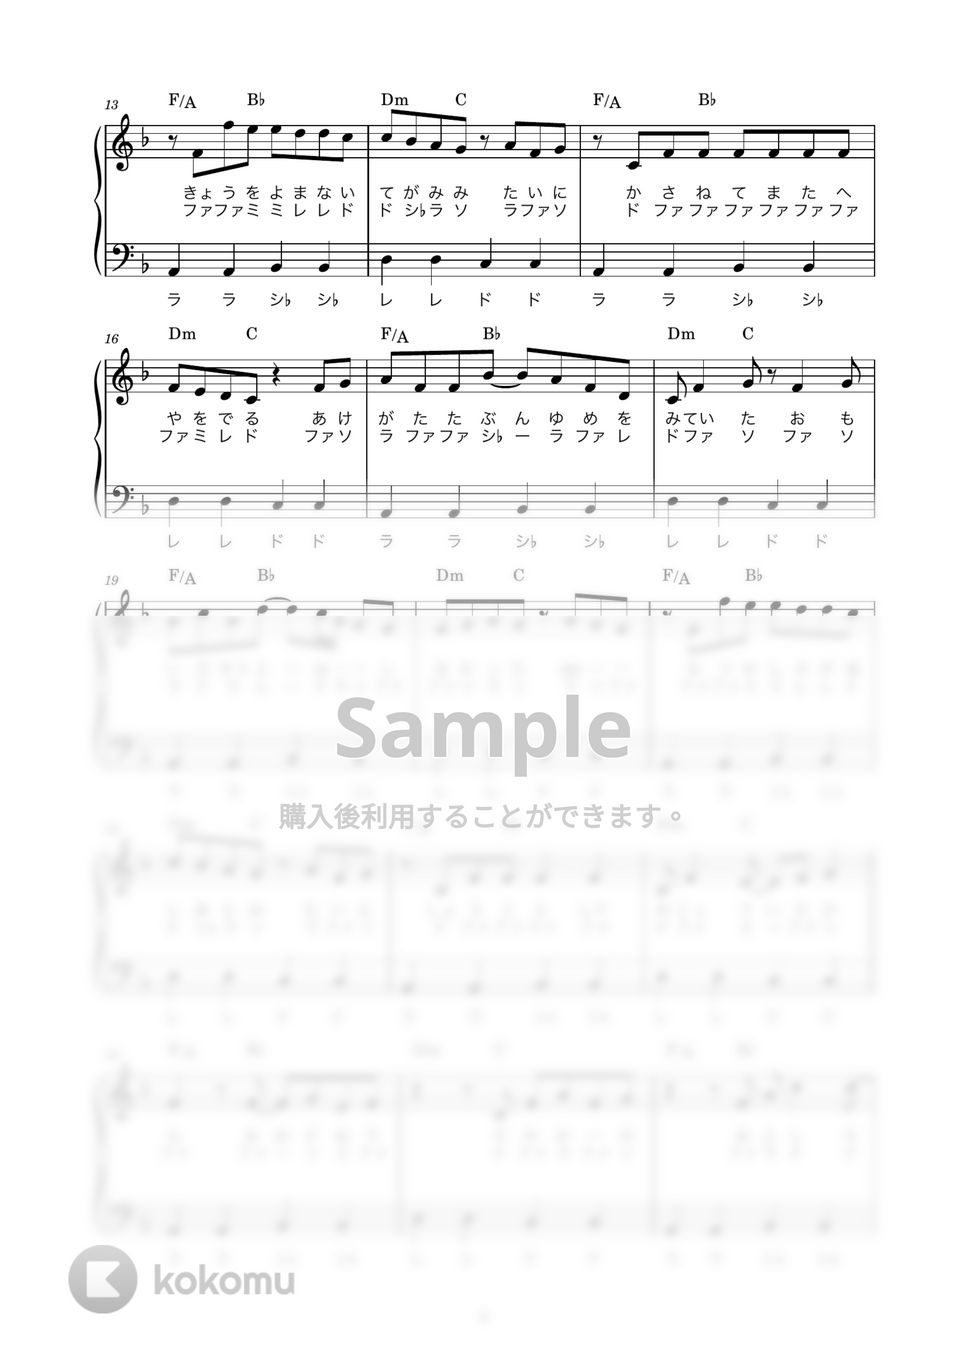 BUMP OF CHICKEN - クロノスタシス (かんたん / 歌詞付き / ドレミ付き / 初心者) by piano.tokyo